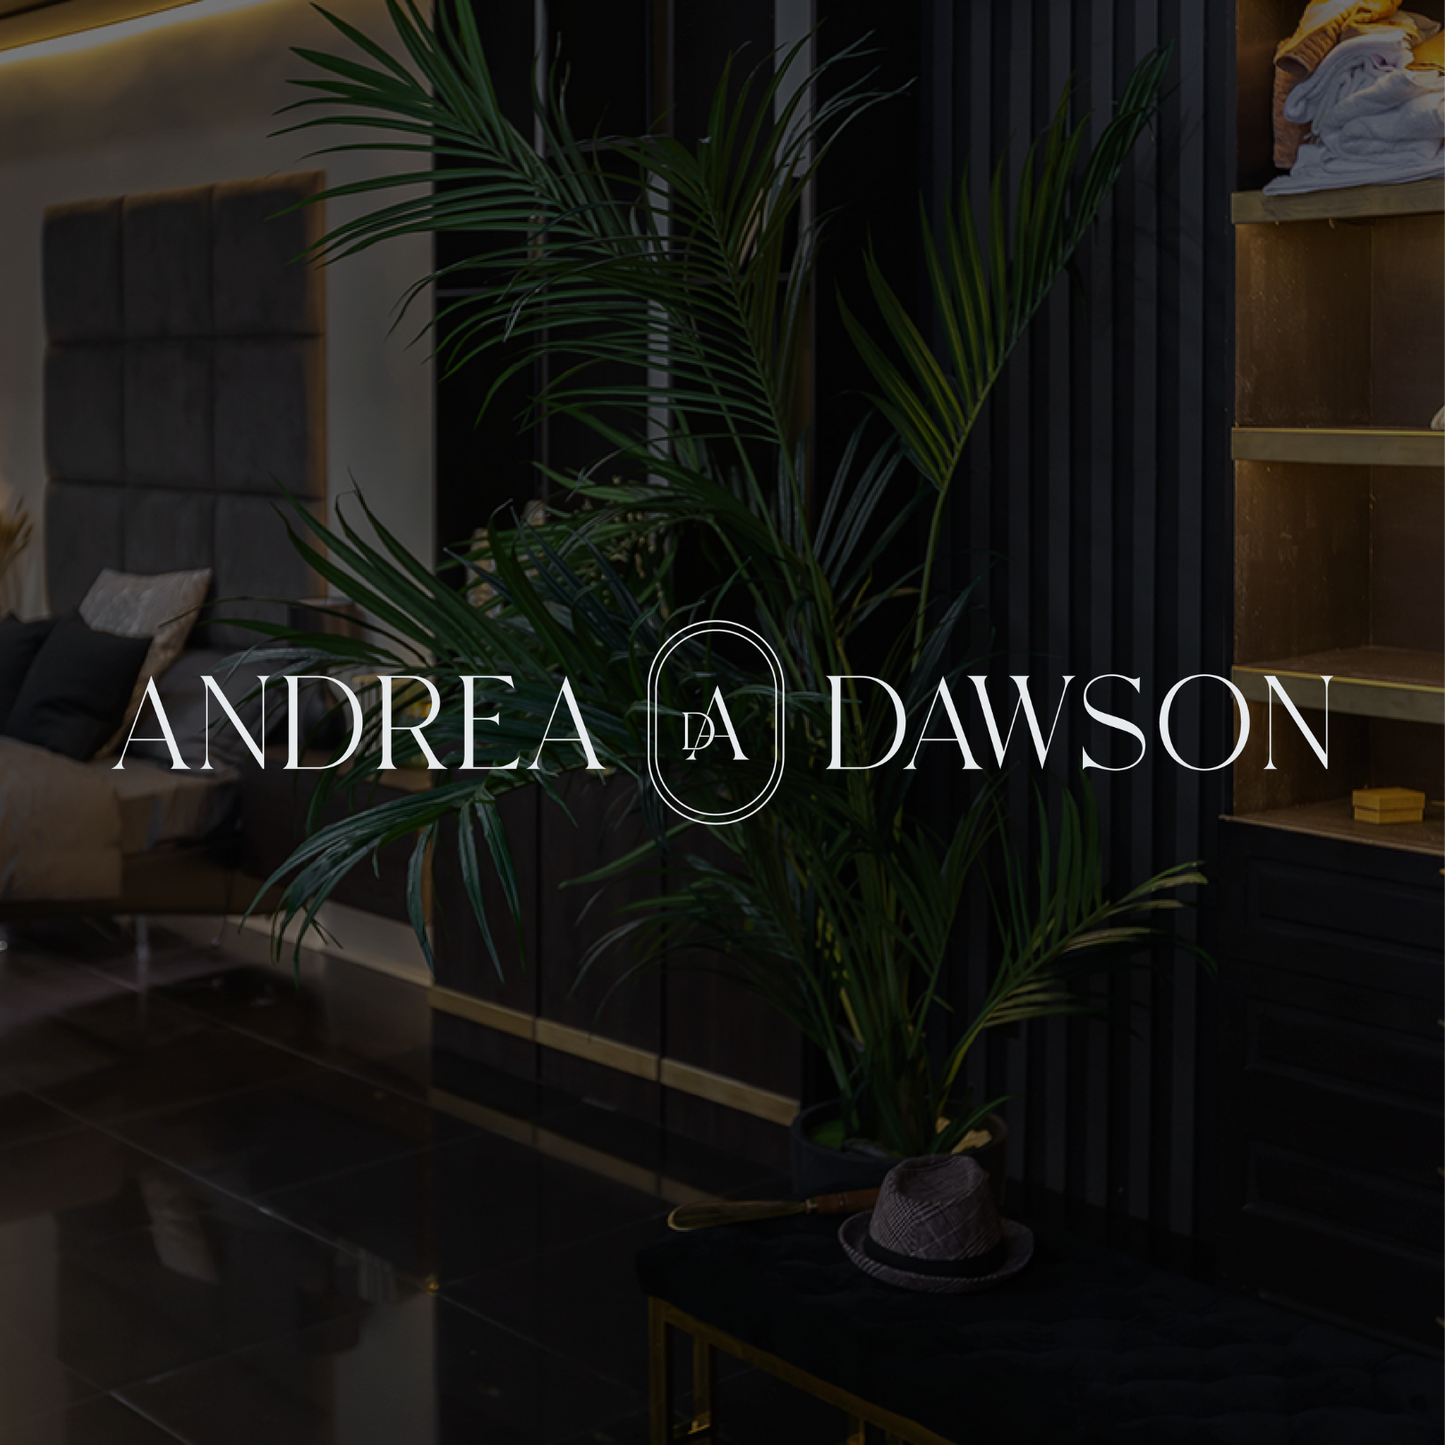 The Dawson : A Real Estate Pre-Made Brand